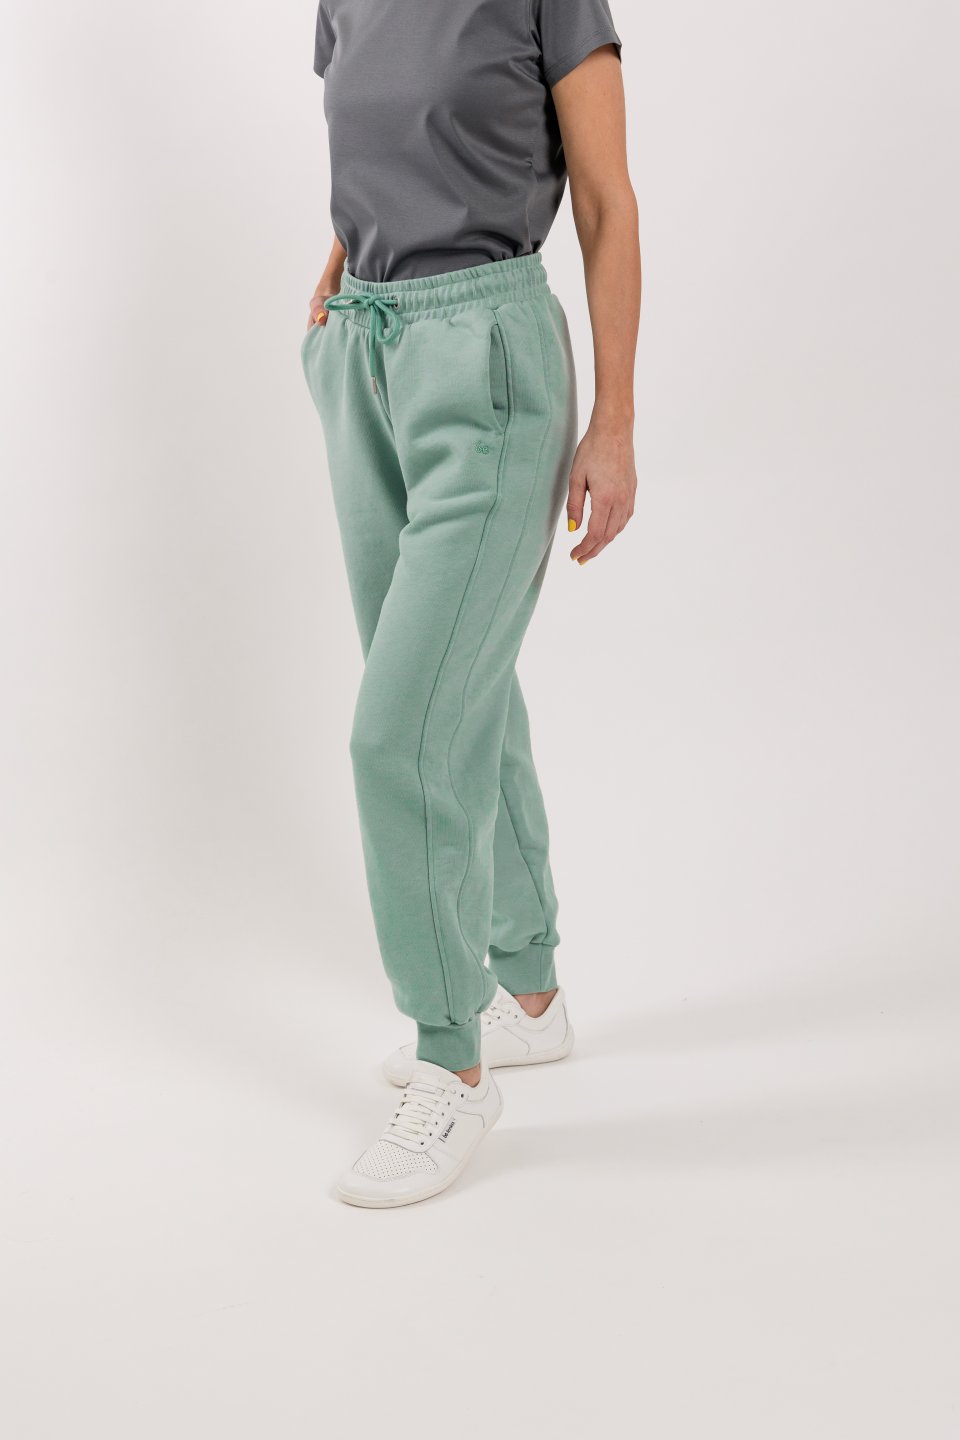 Dámské teplákové kalhoty Be Lenka Essentials - Pistachio Green